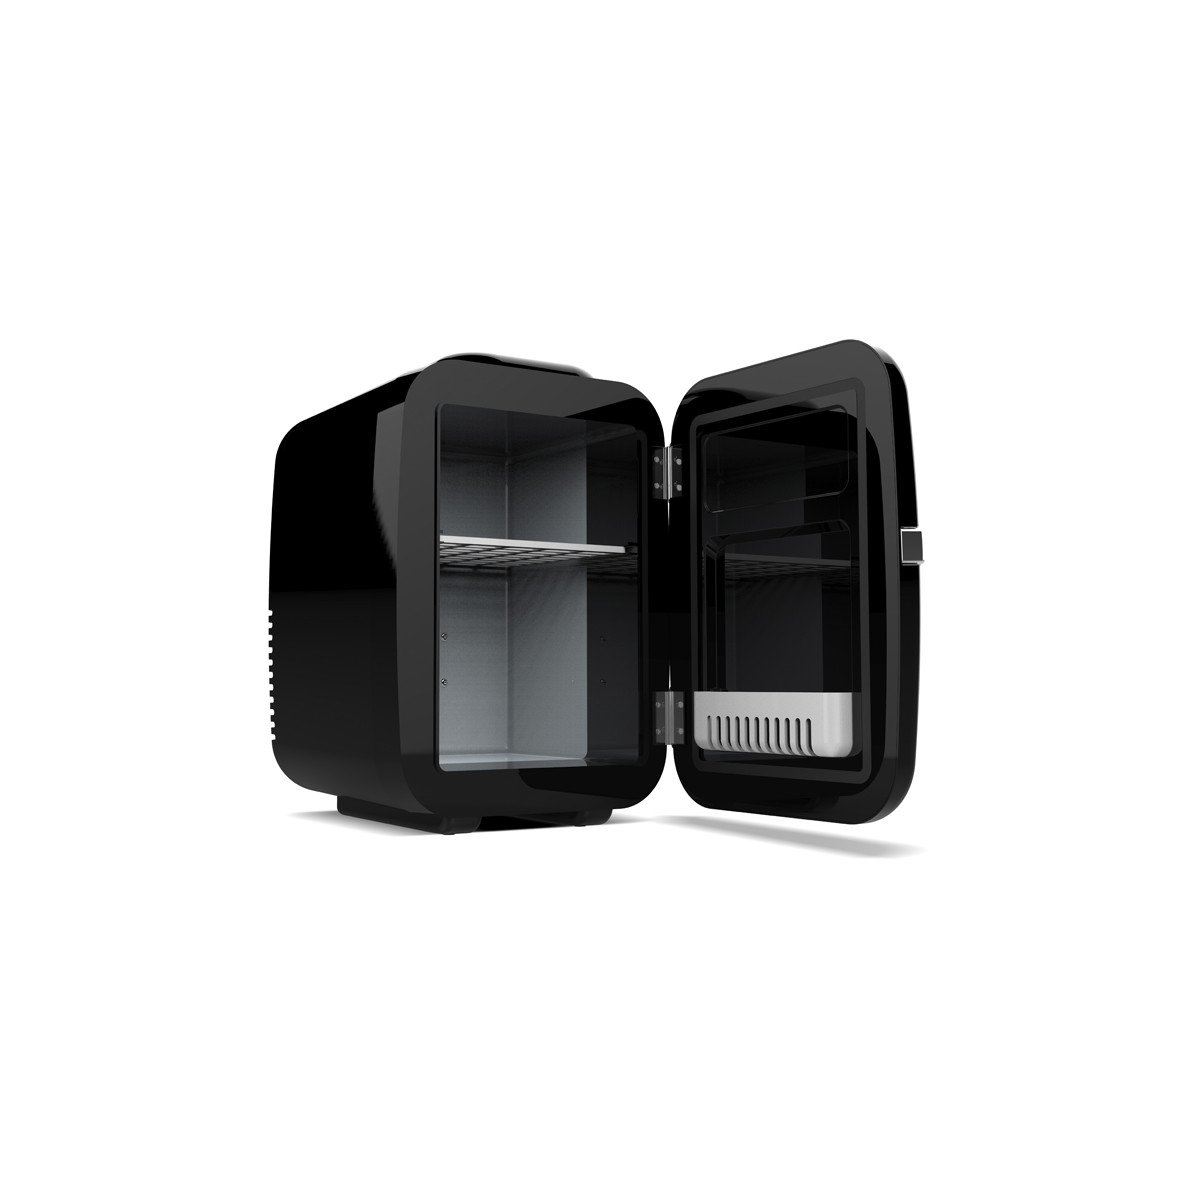 Mini réfrigérateur 4 L noir - RAMF4B